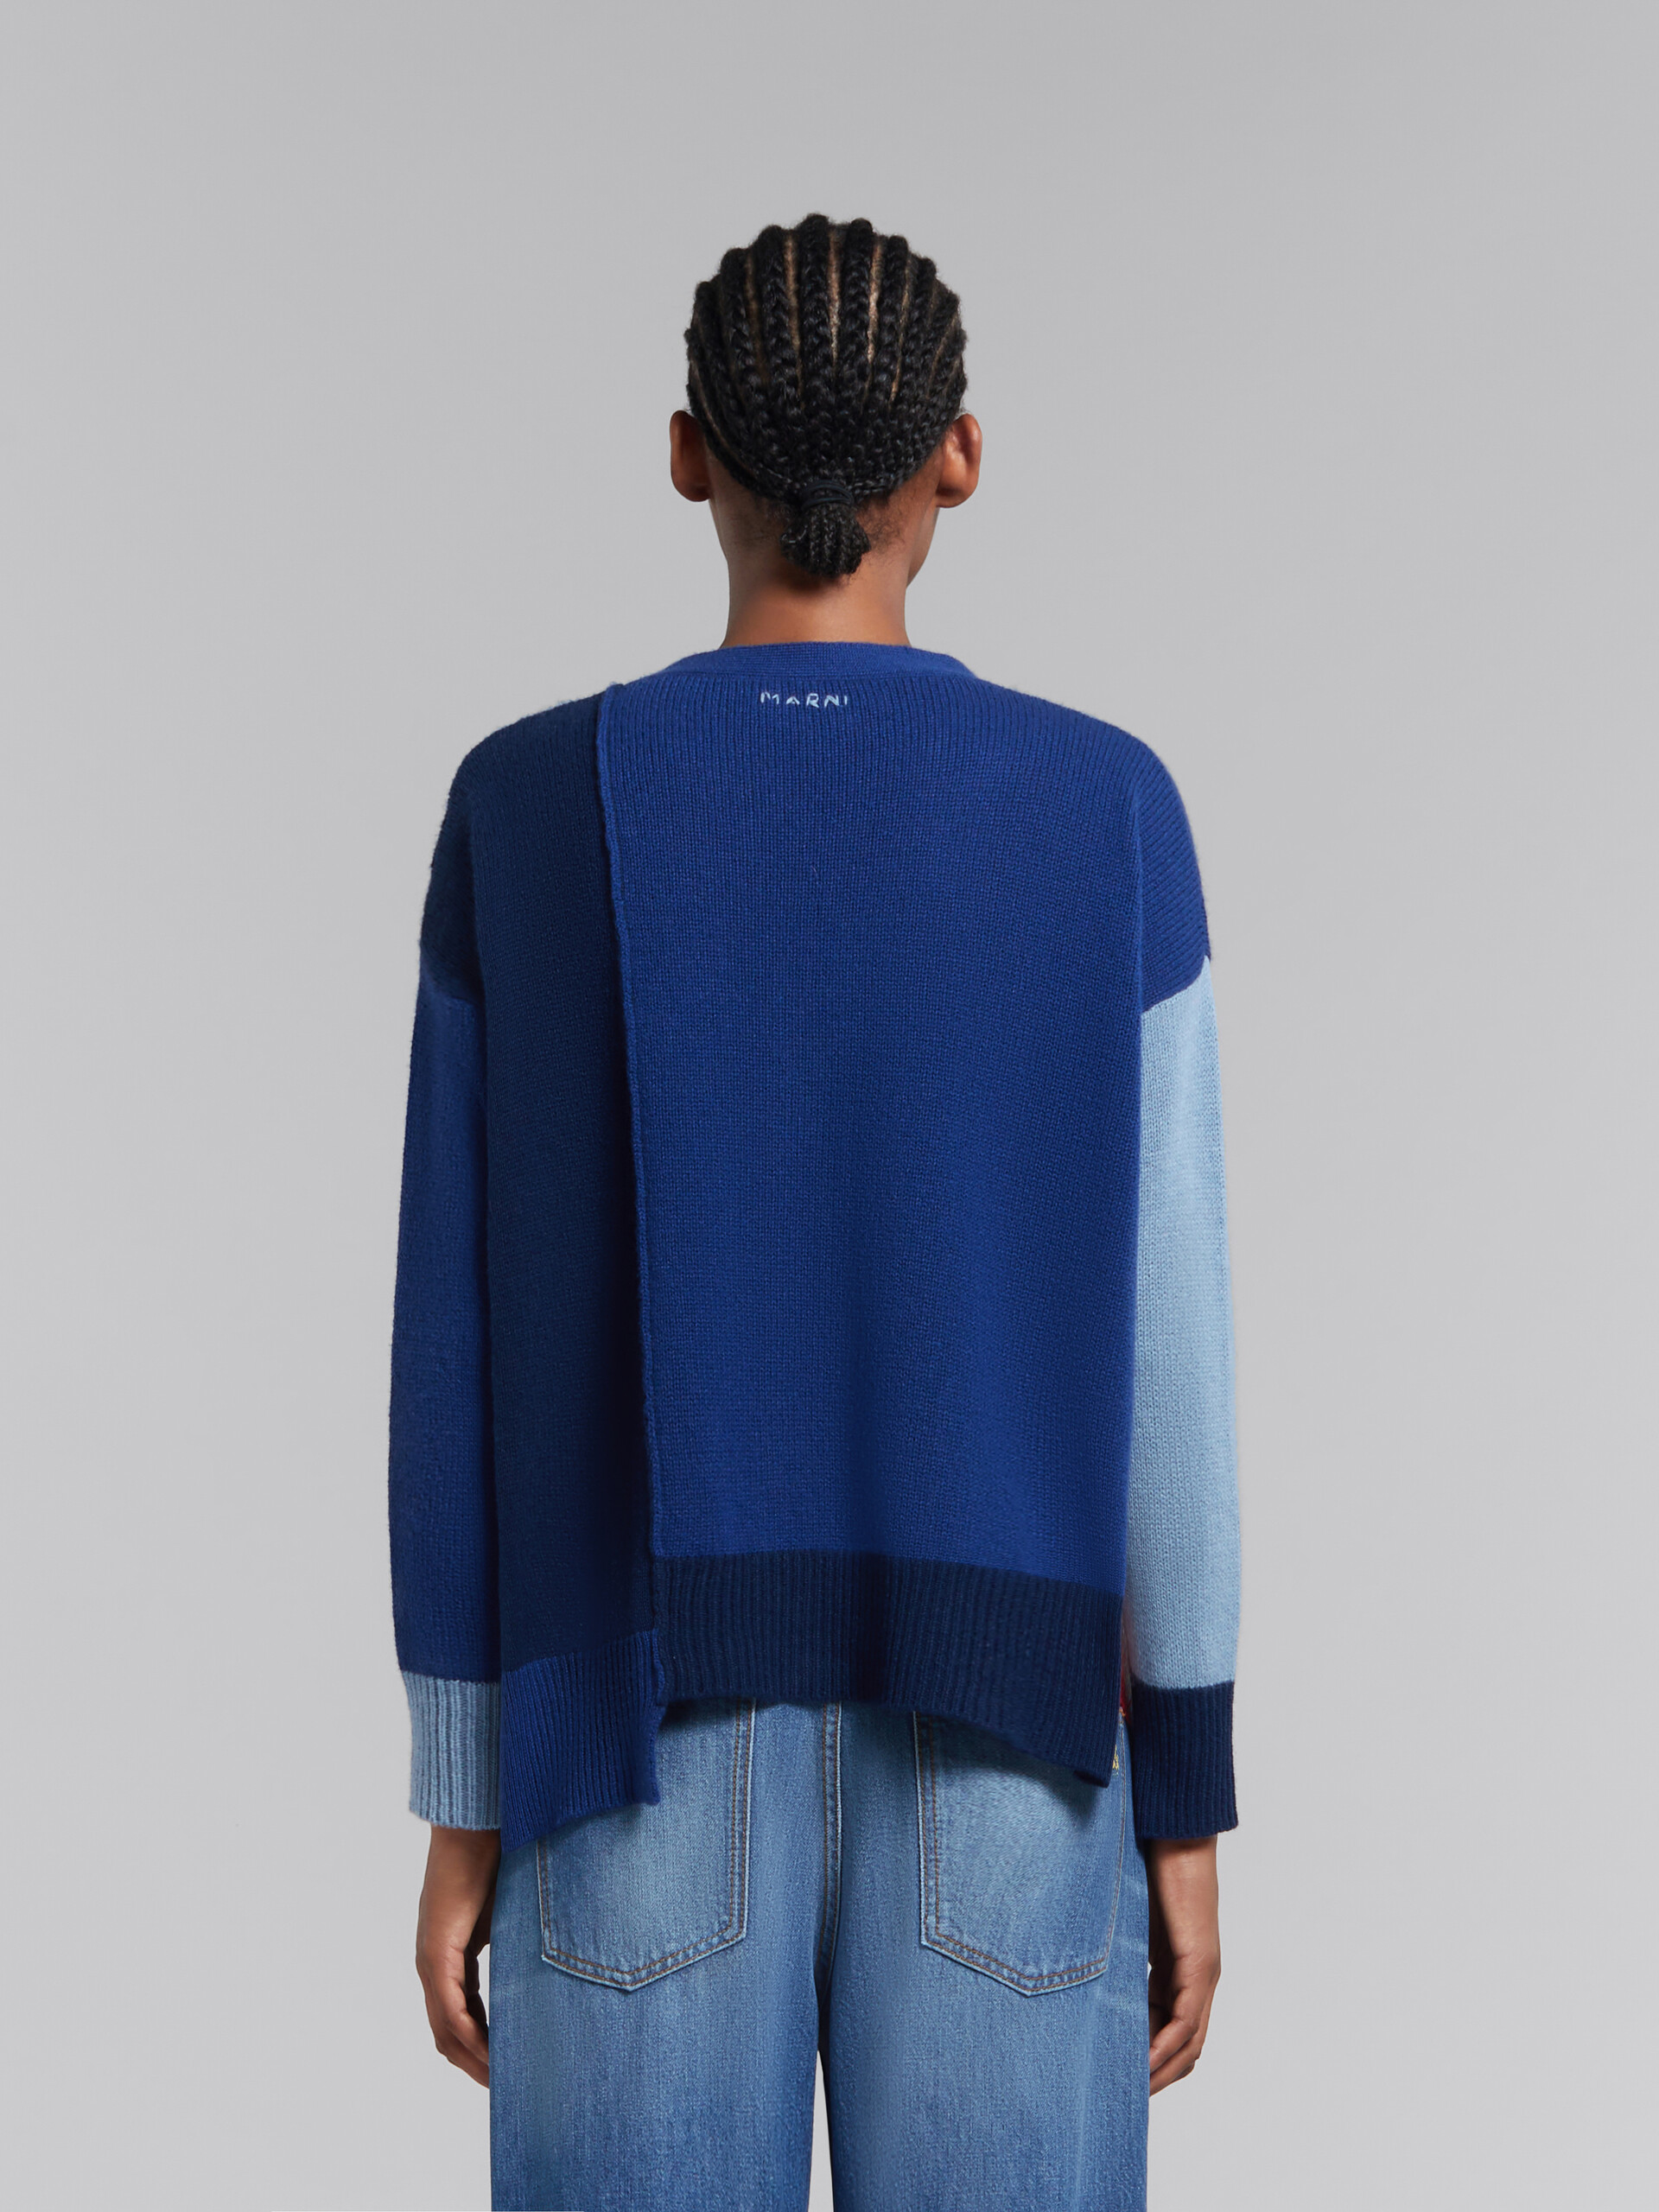 Cárdigan azul de cachemira con bloques de colores - jerseys - Image 3